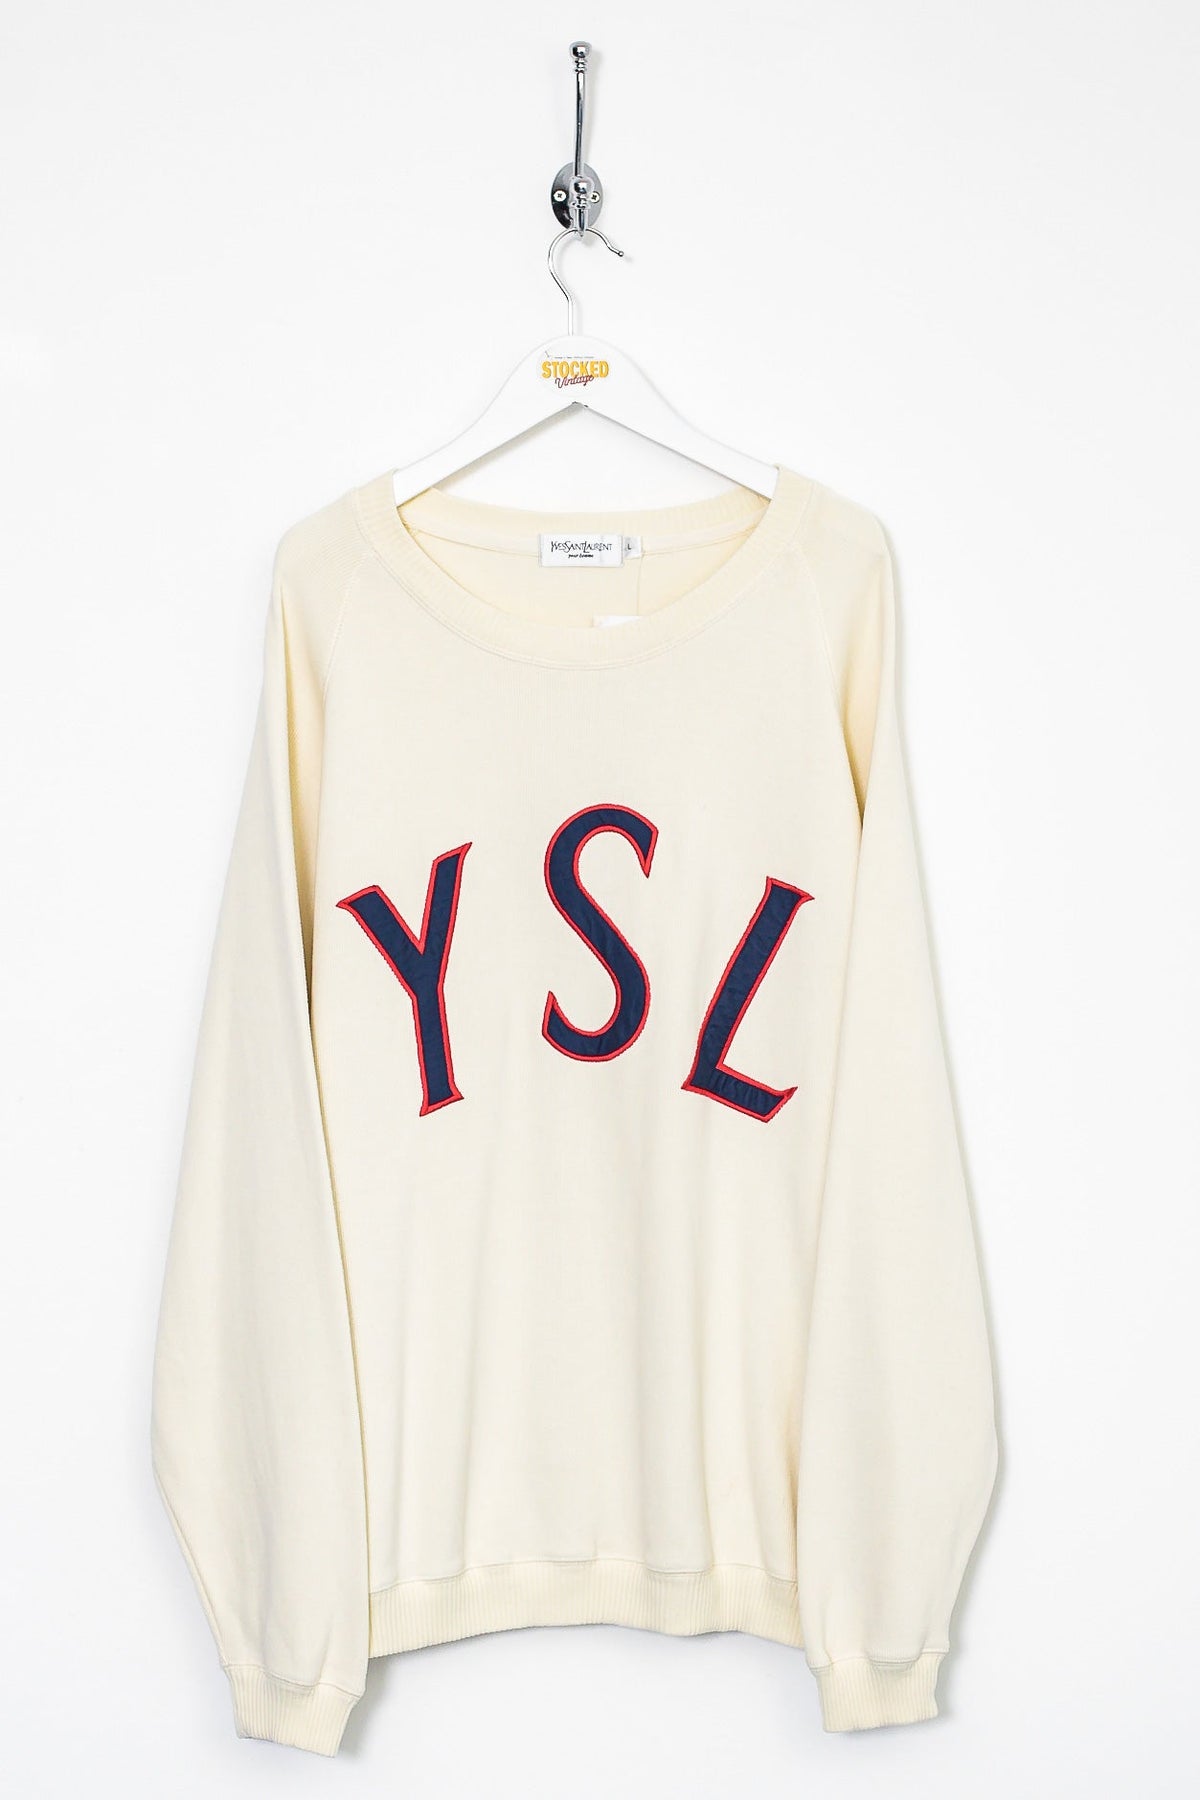 90s YSL Sweatshirt (L)